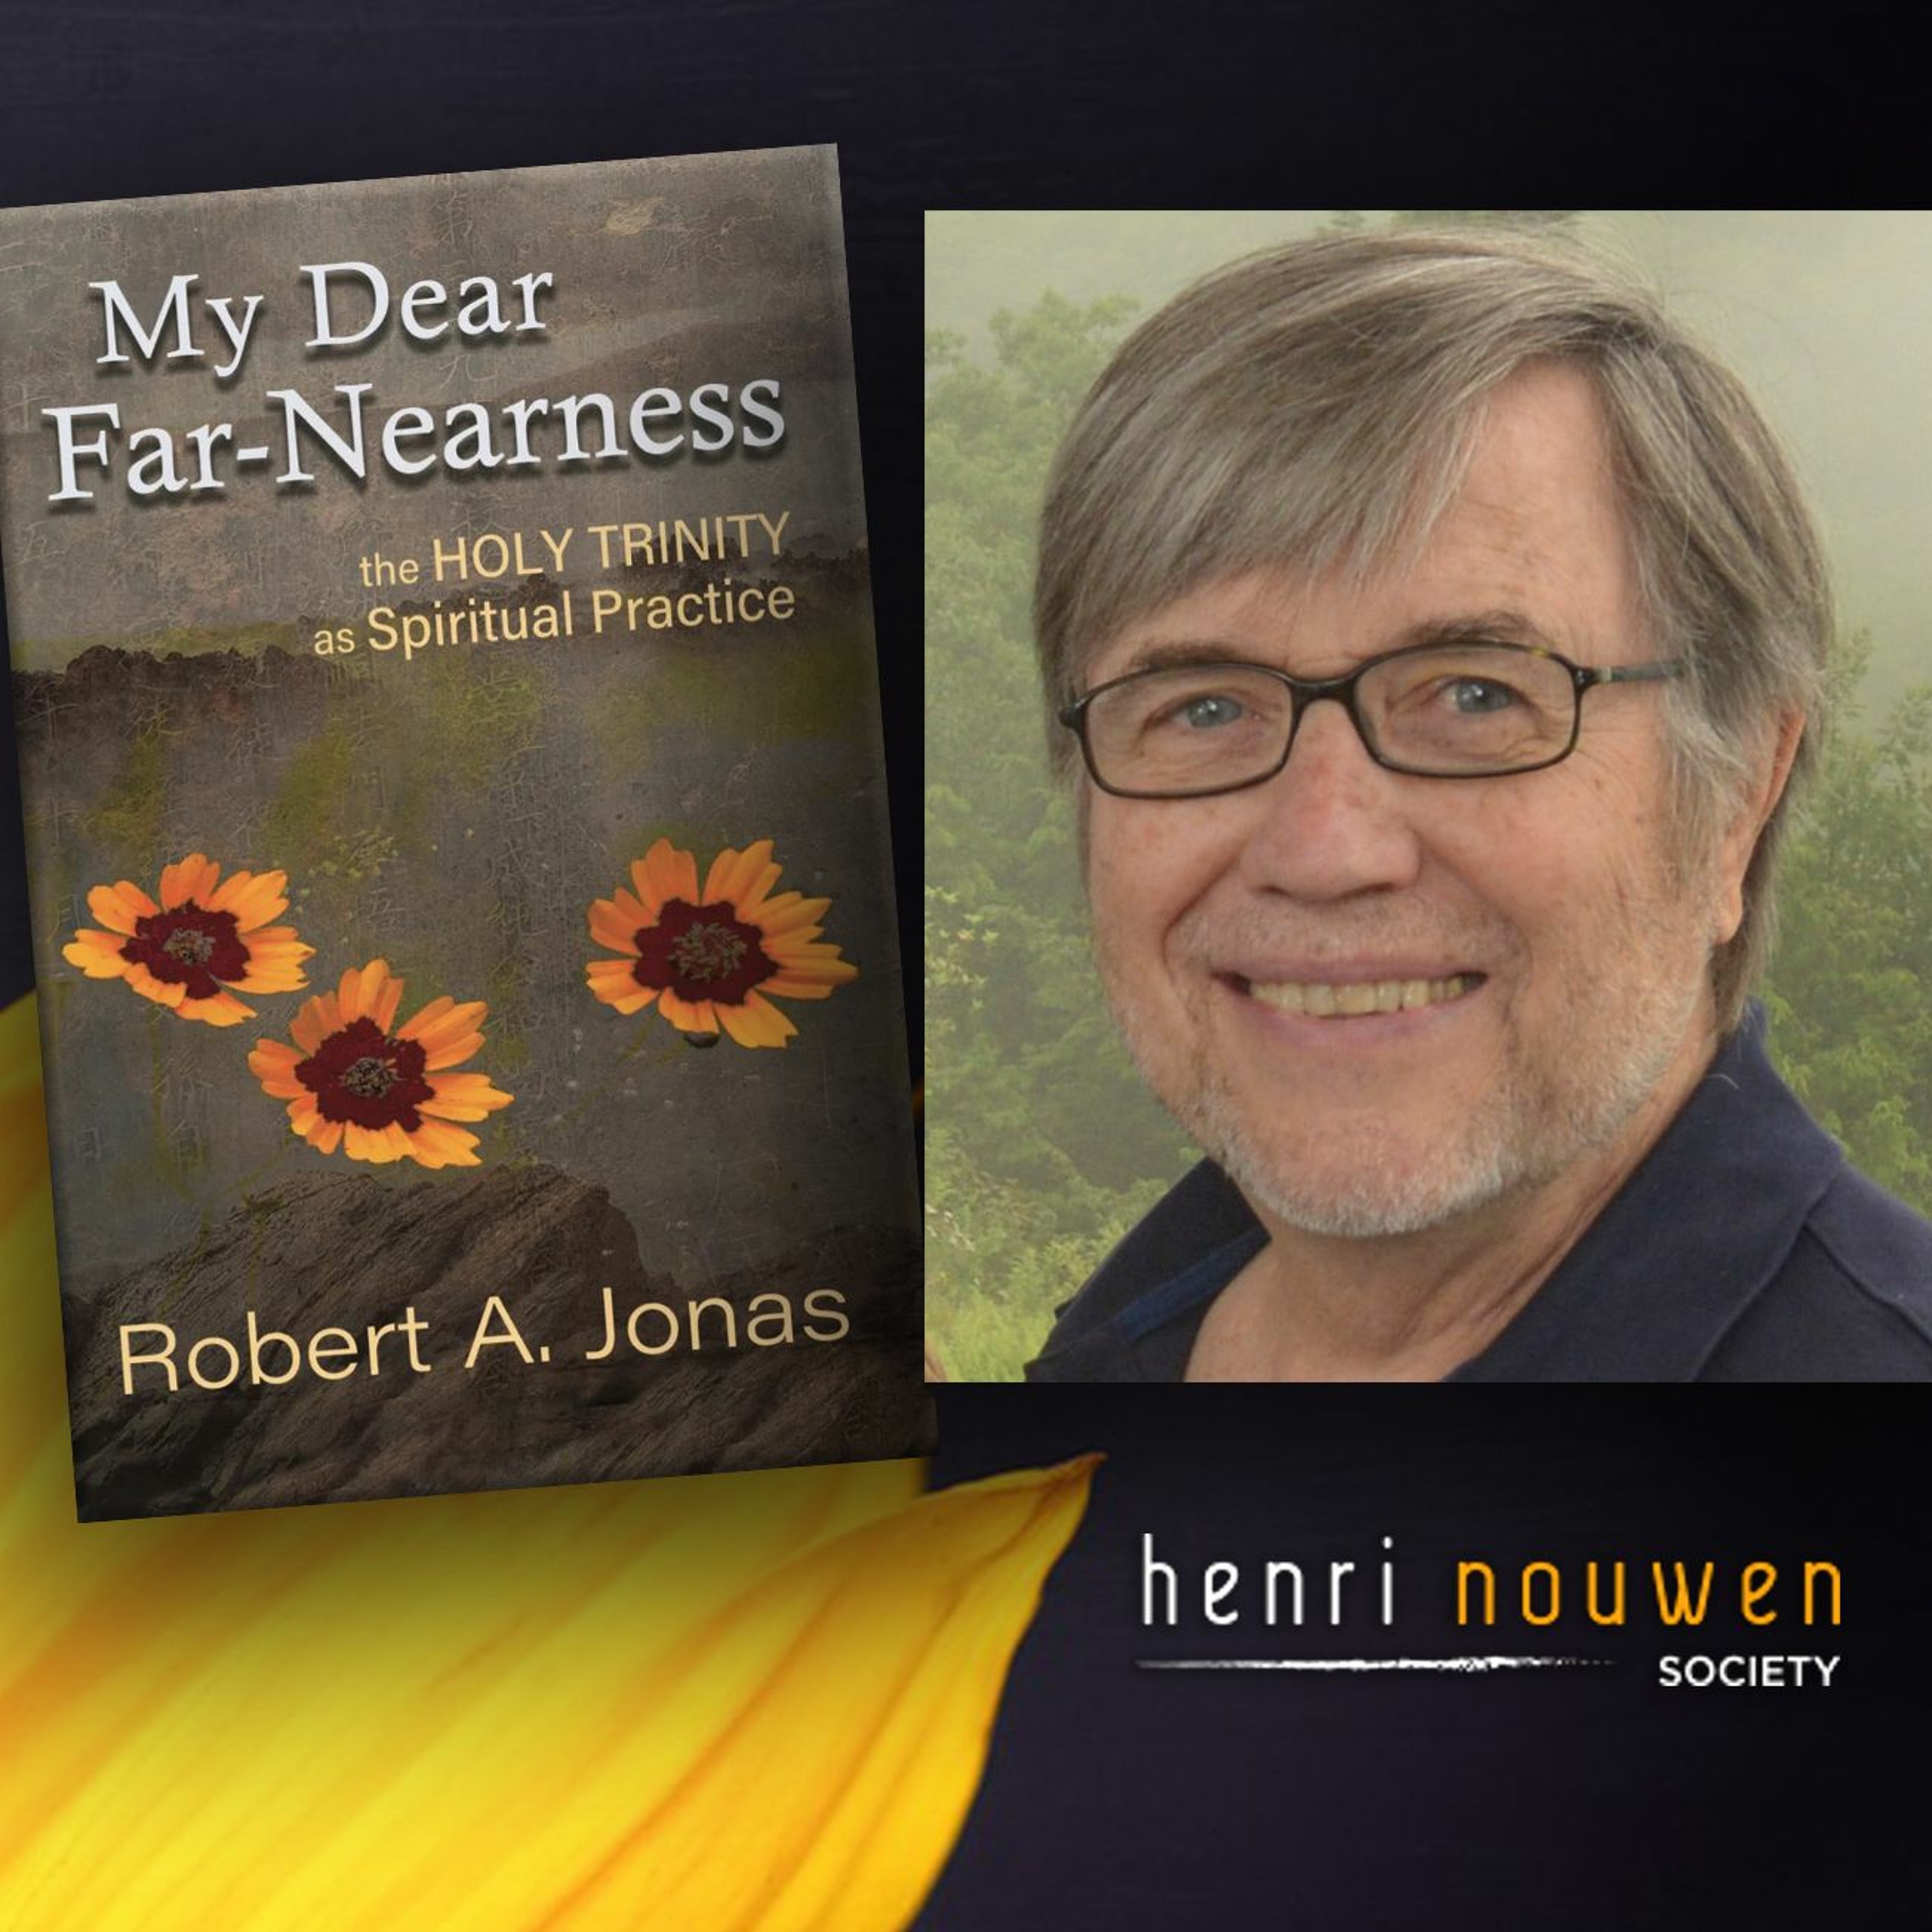 Robert A. Jonas, "Jesus, Buddha & Henri Nouwen" | Henri Nouwen, Now & Then Podcast